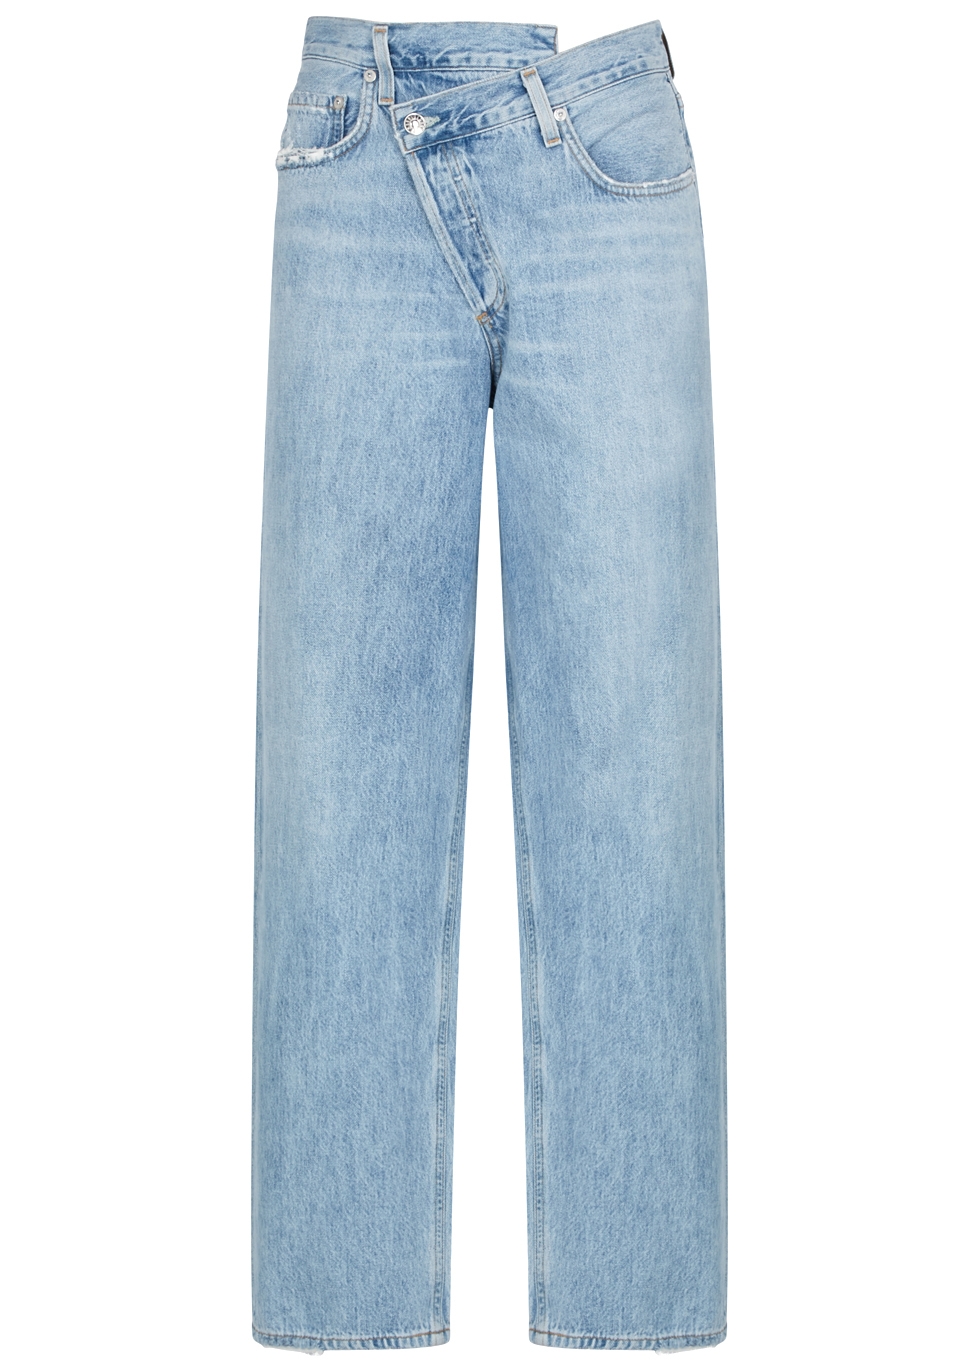 Criss Cross straight-leg jeans